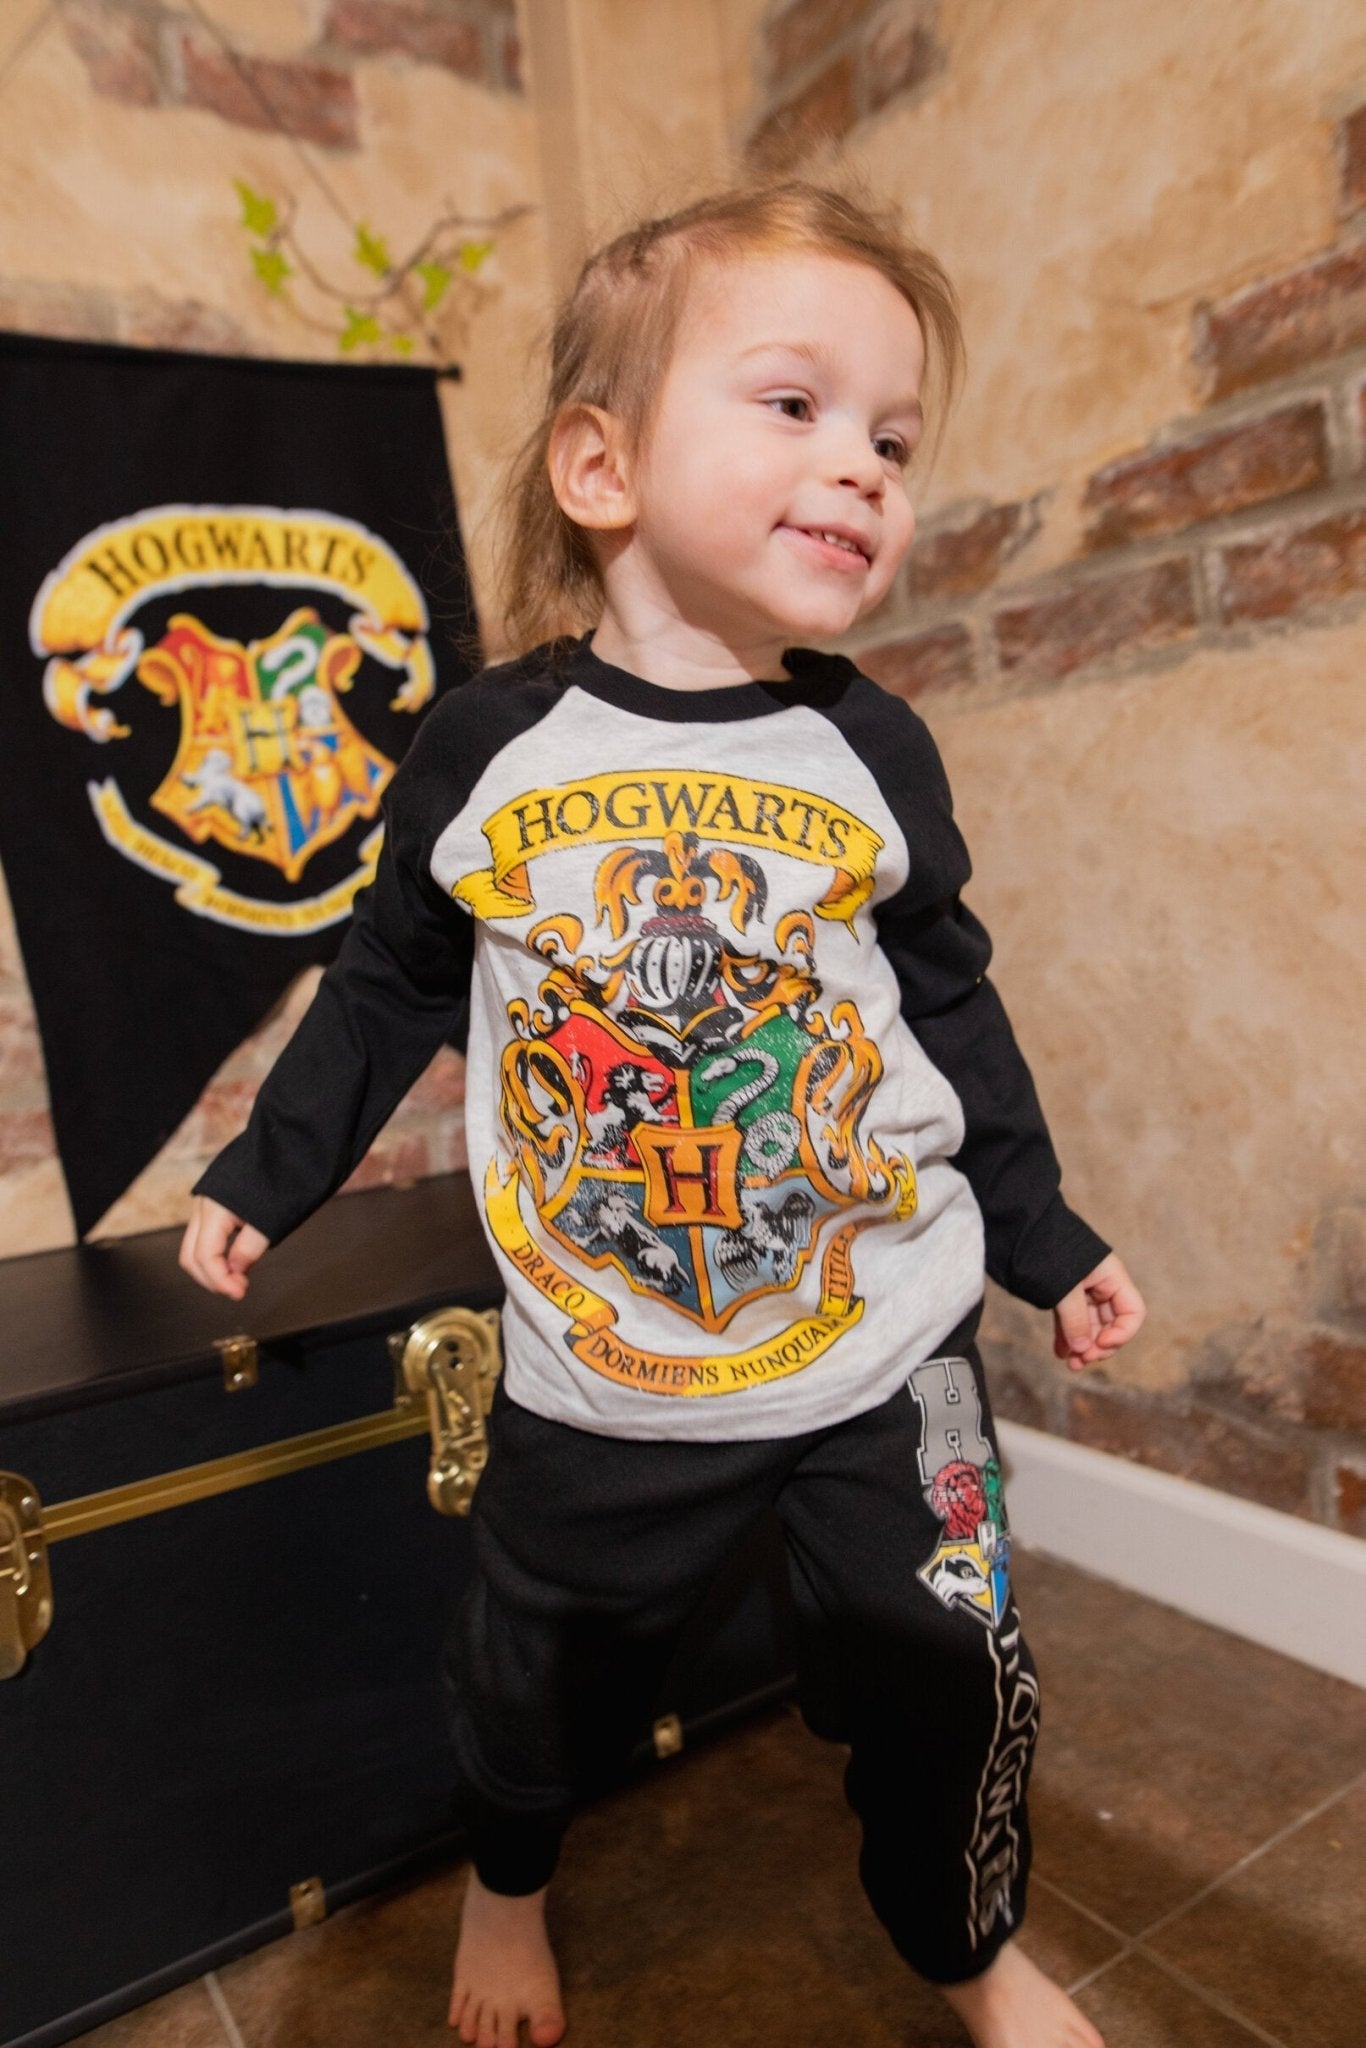 Harry Potter 2 Pack Long Sleeve Graphic T-Shirt - imagikids